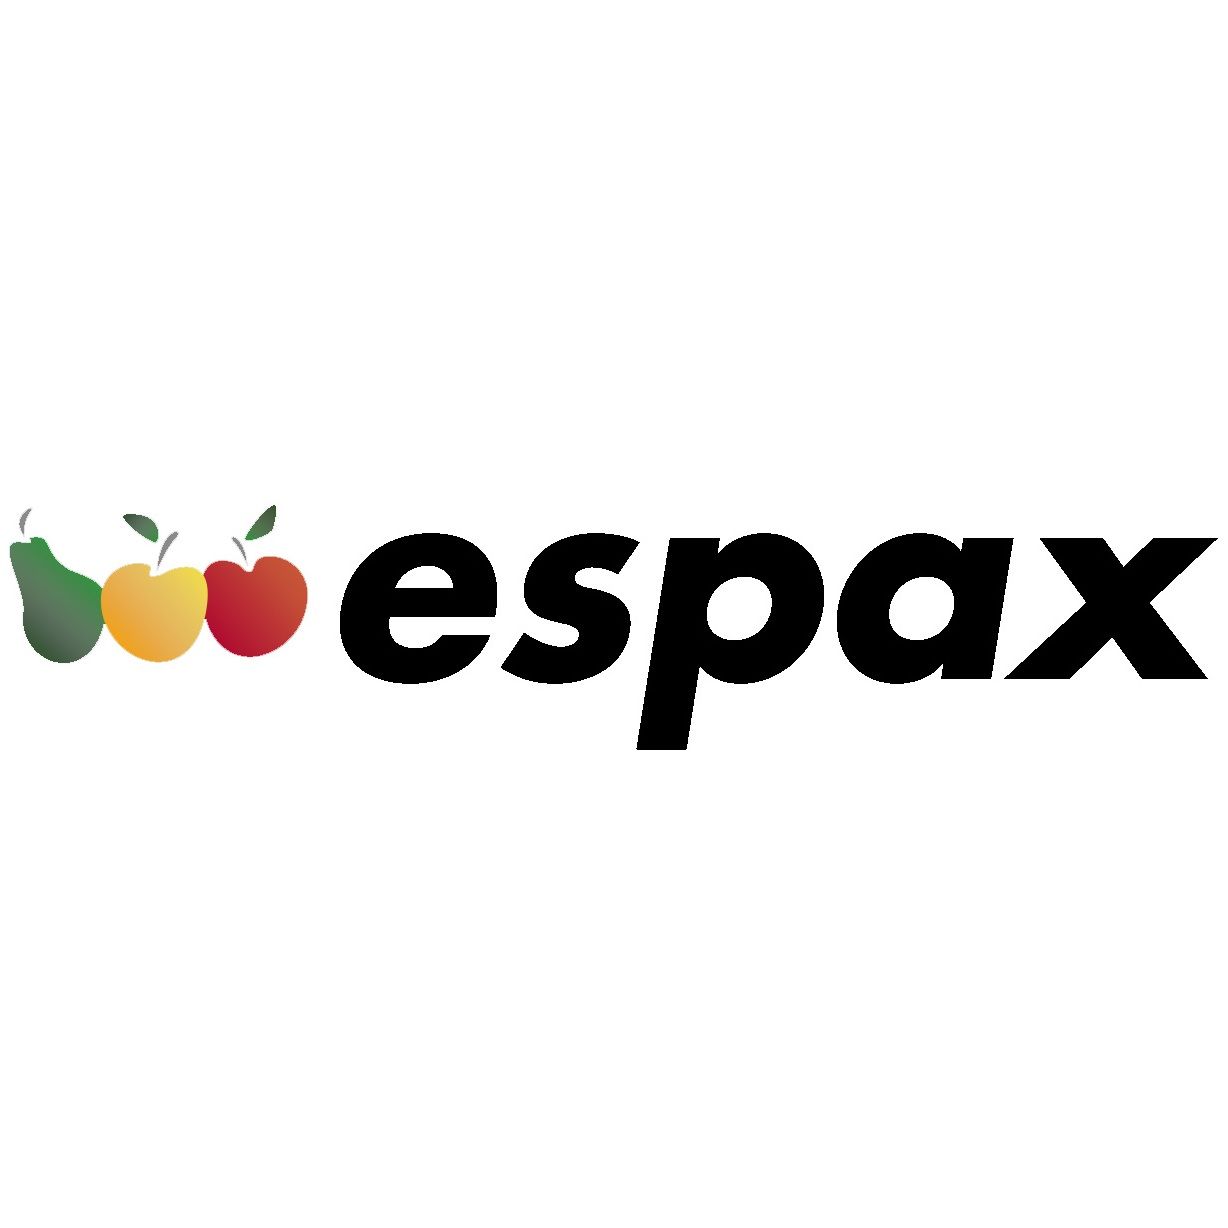 Espax